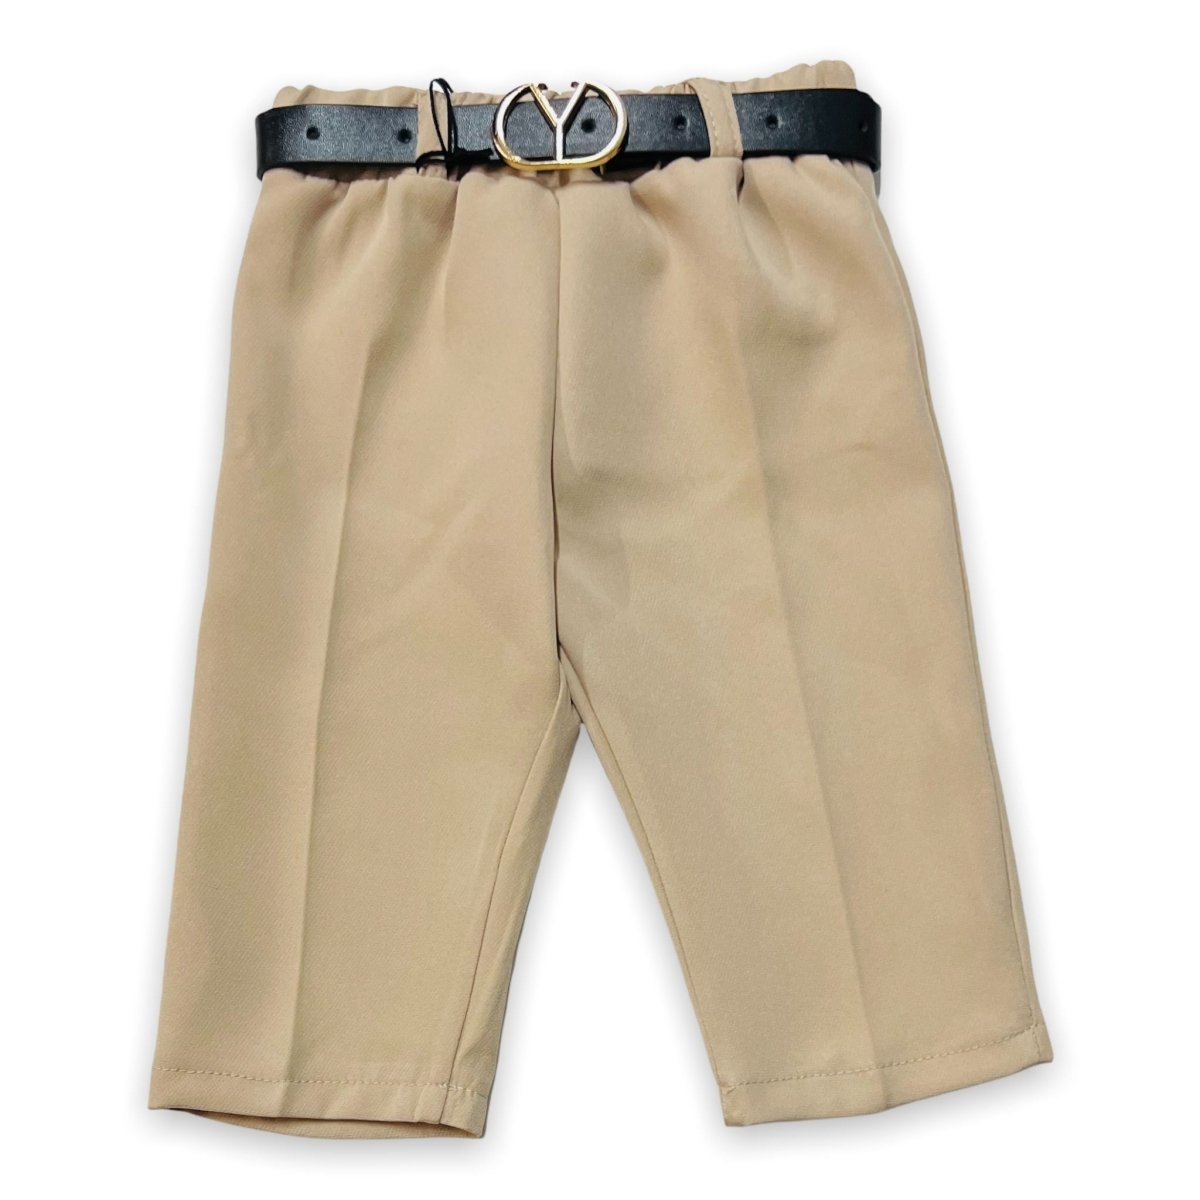 Pantalone Modello Capri - Mstore016 - Pantalone neonata - Granada